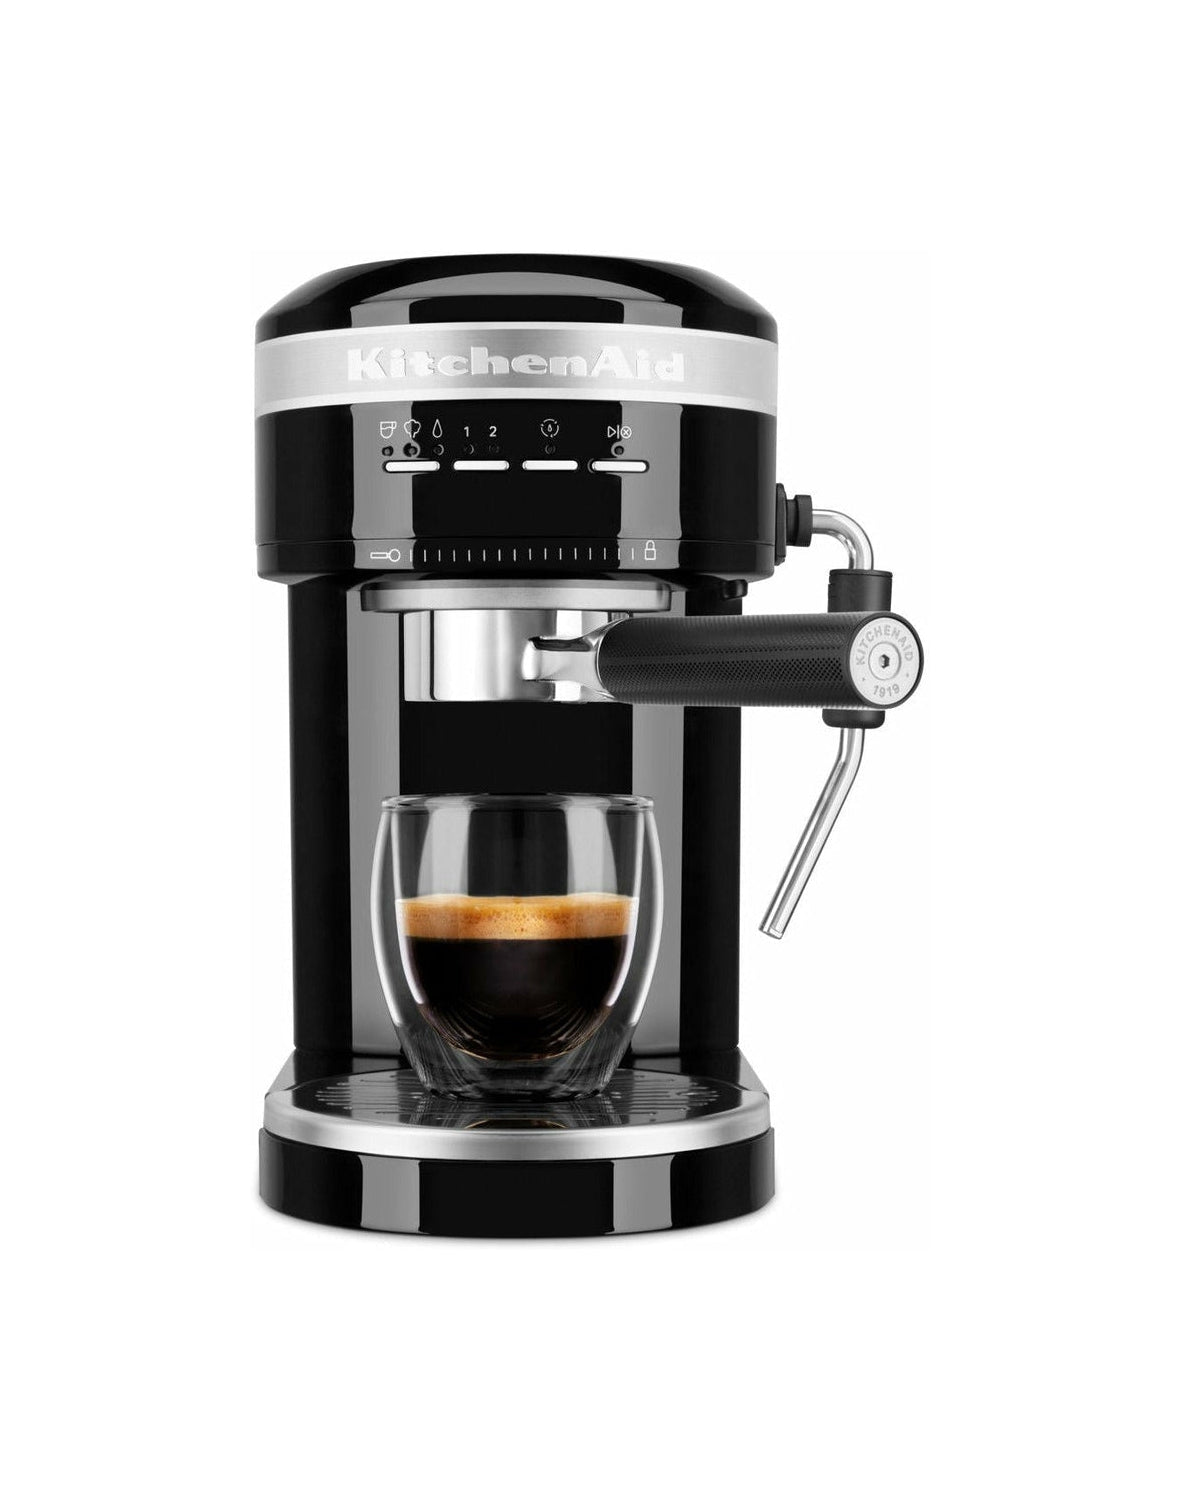 Køkkenhjælp 5 KES6503 Artisan Semi Automatic Espresso Machine, Onyx Black